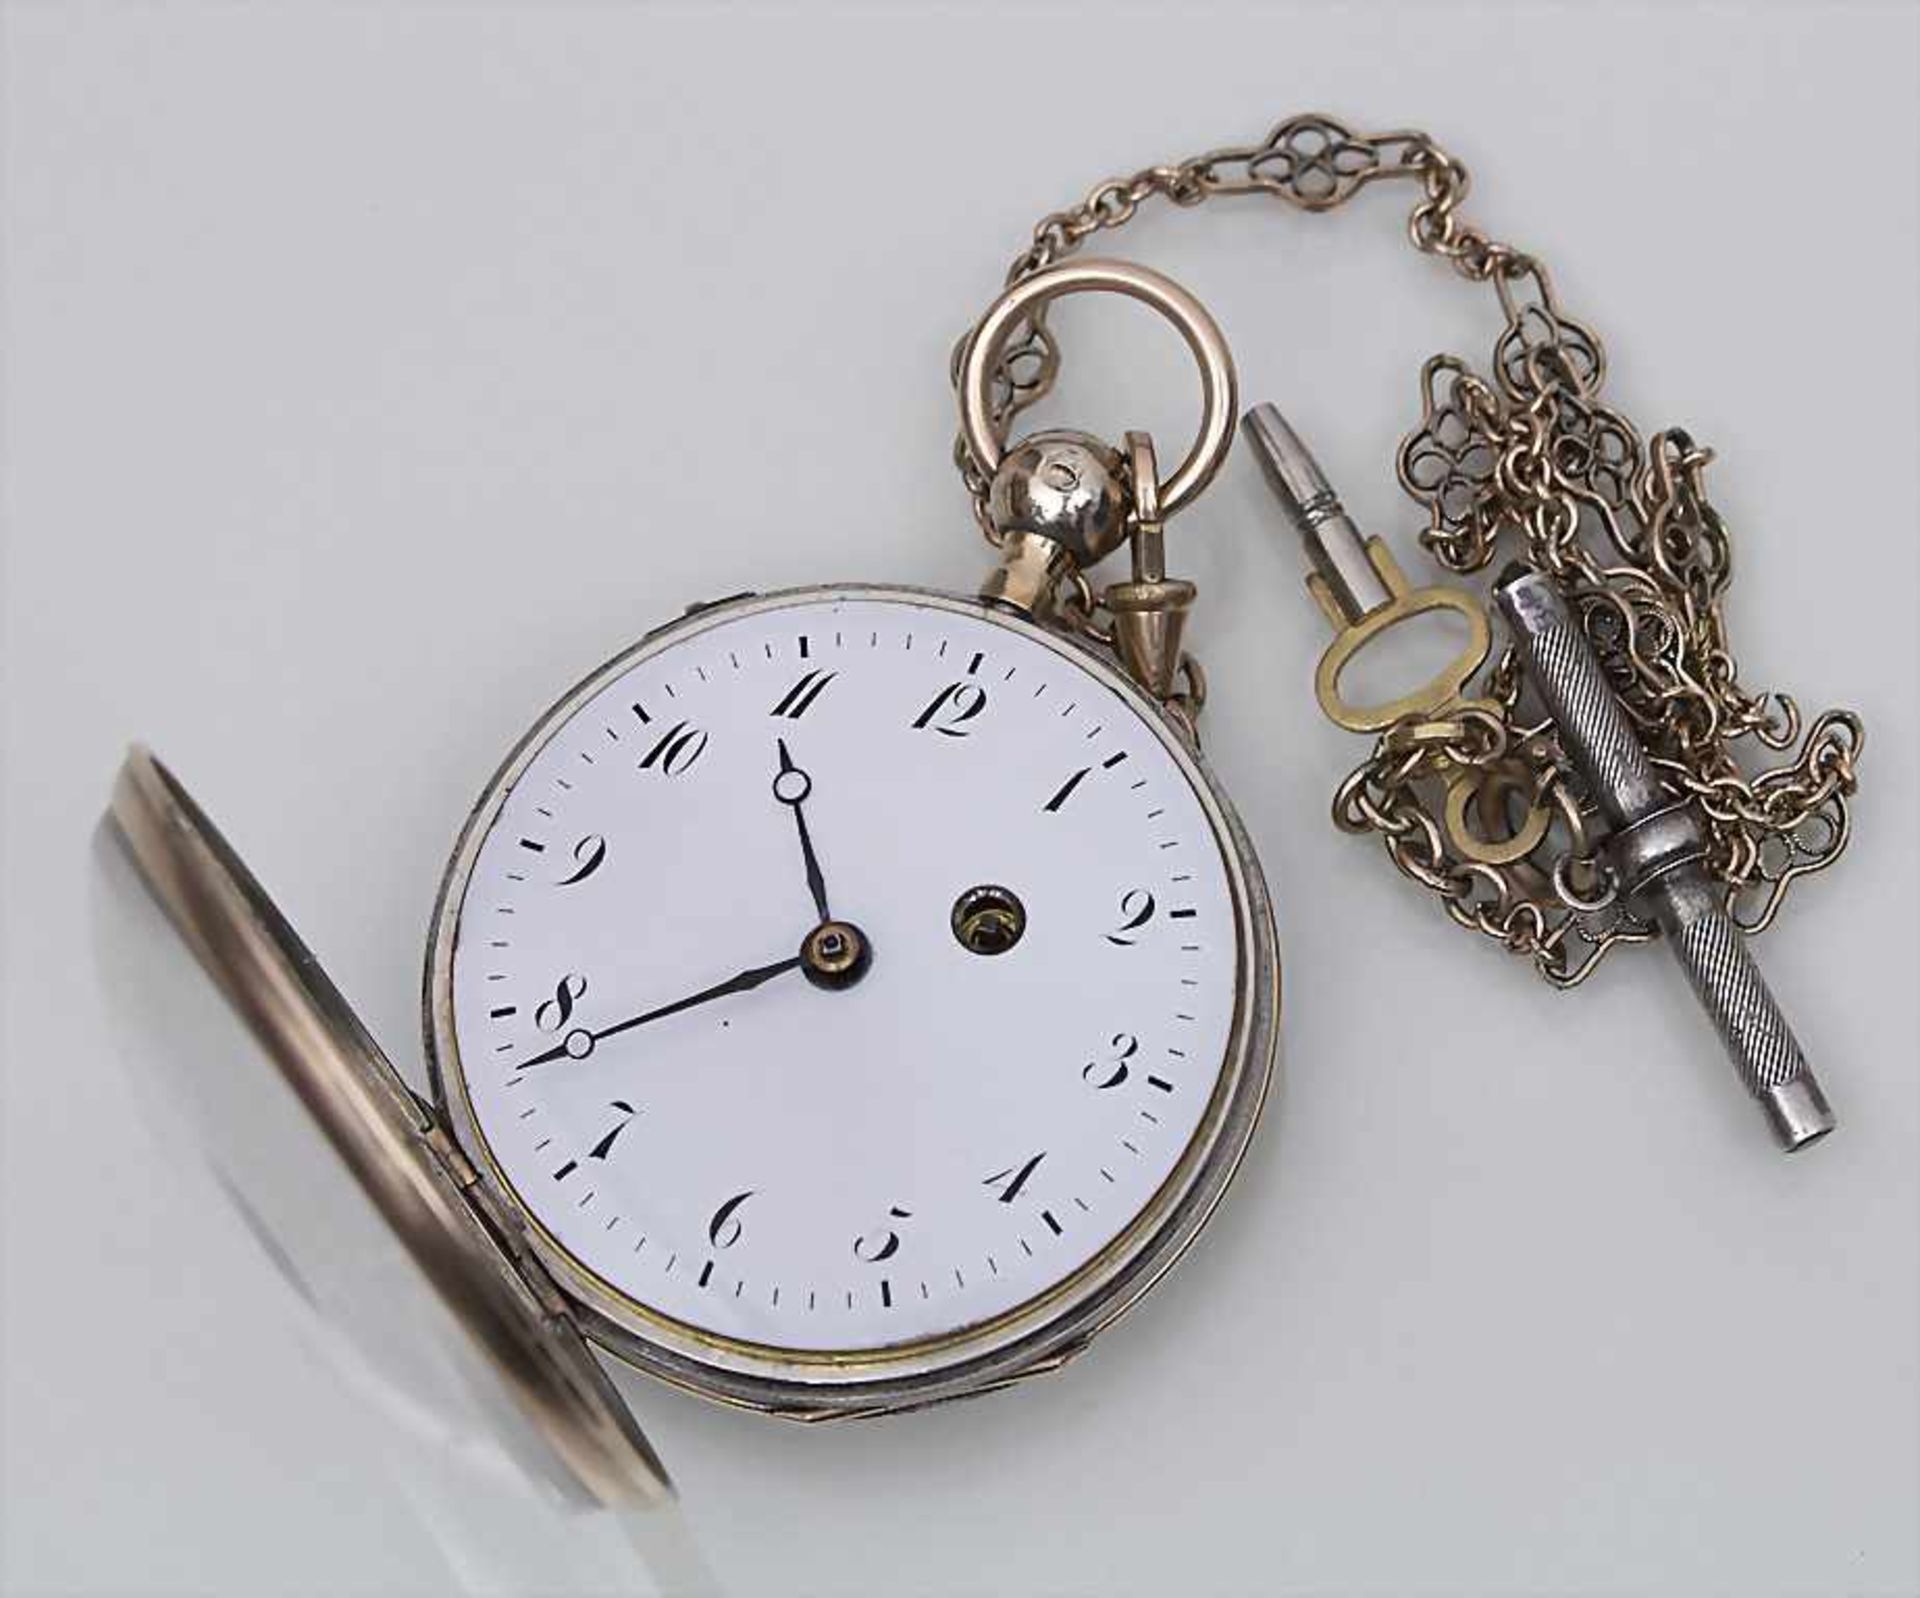 Taschenuhr / Pocket Watch, ¼-Repetition, Swiss Made, ca. 1850